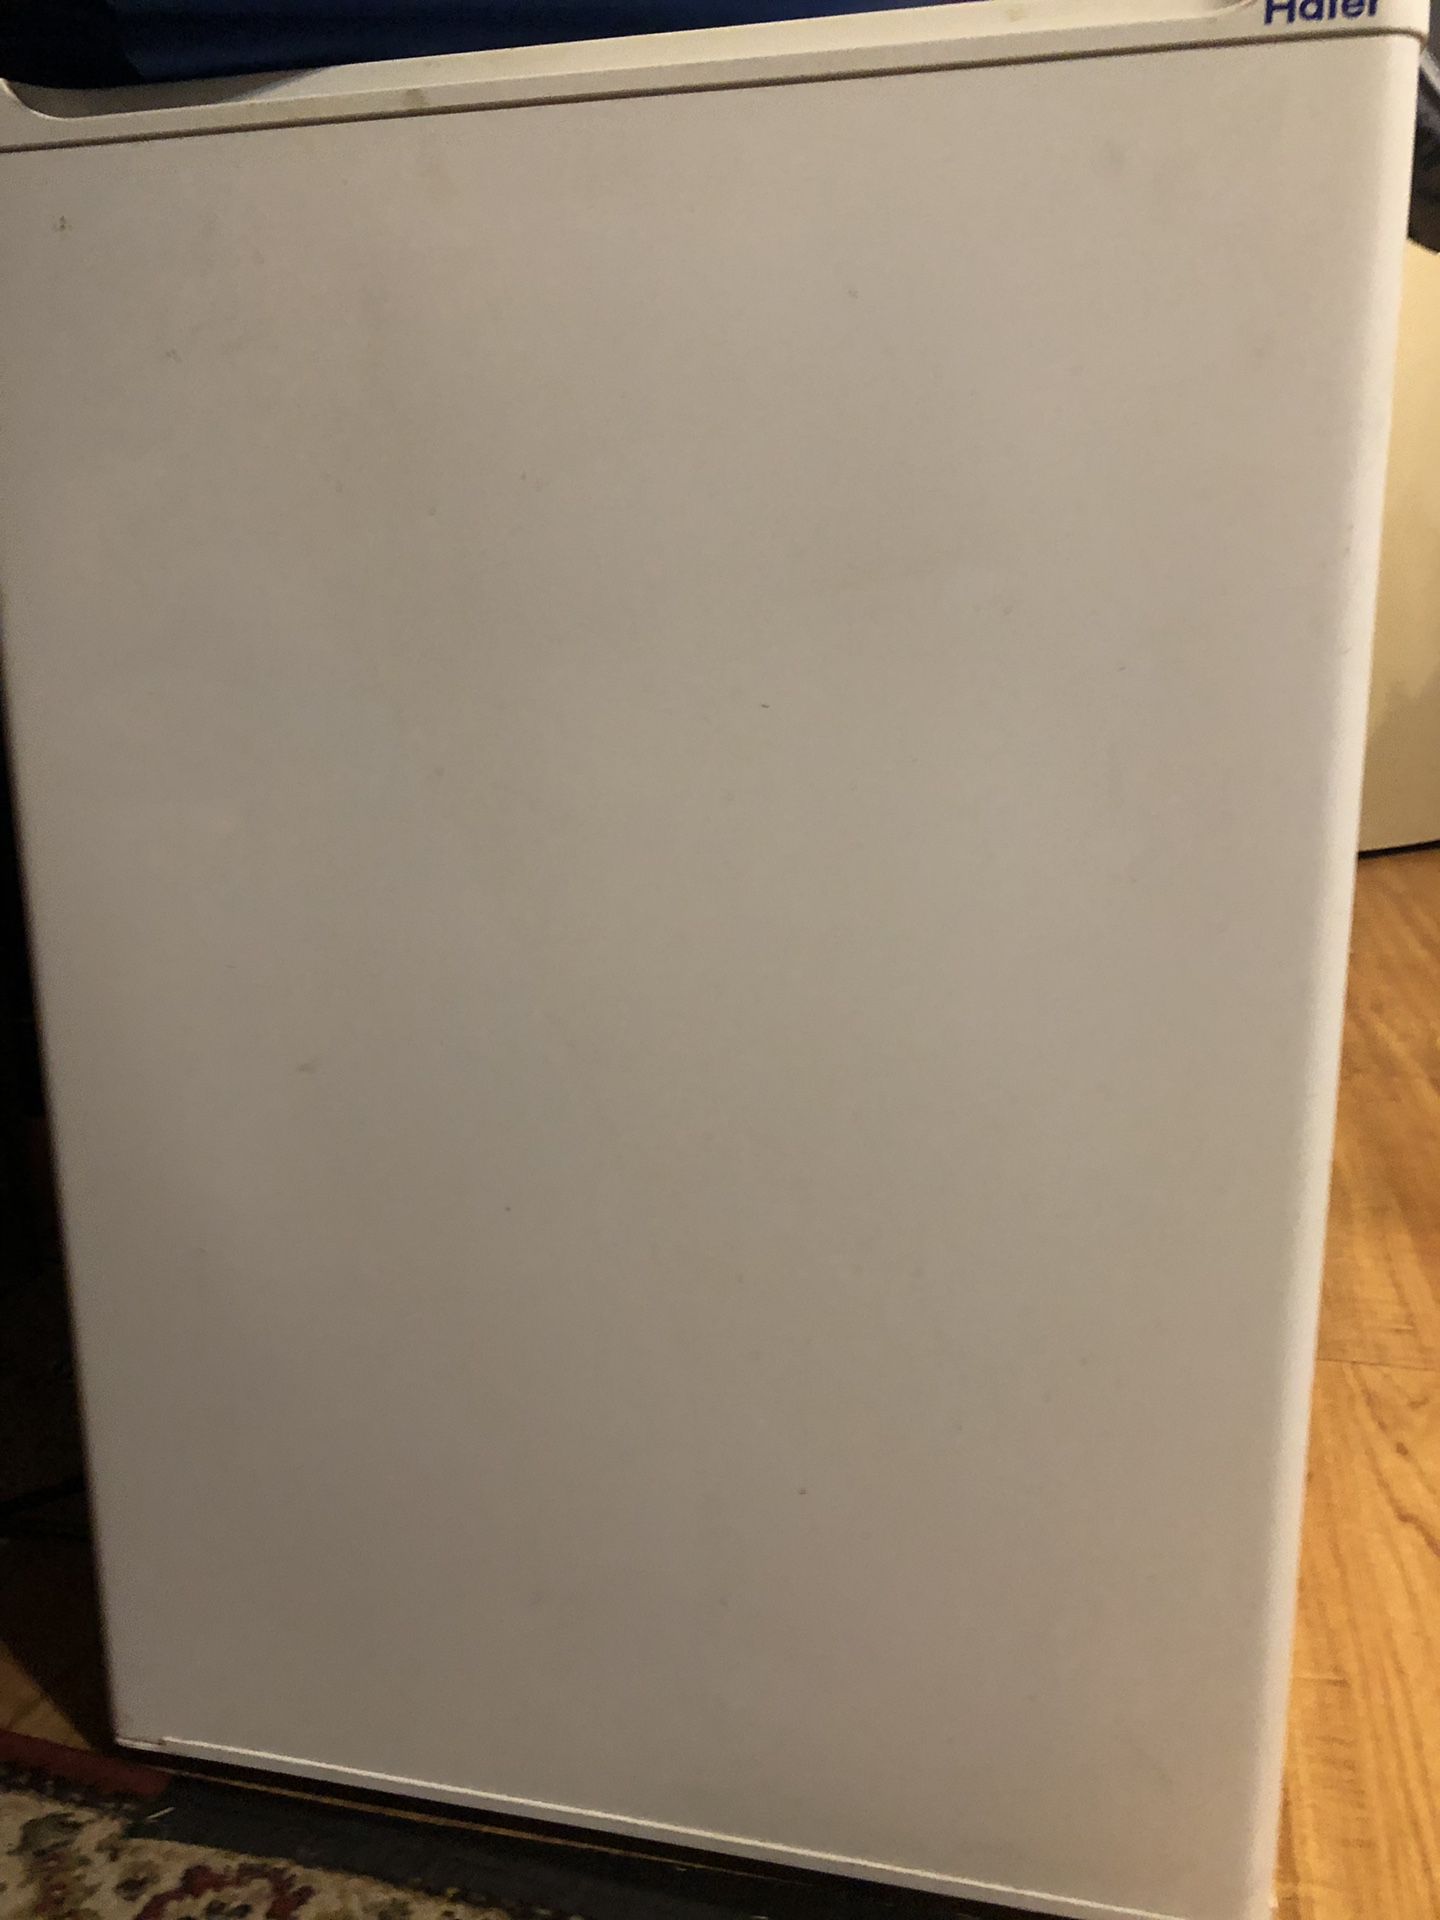 Mini Haier fridge with little freezer works great